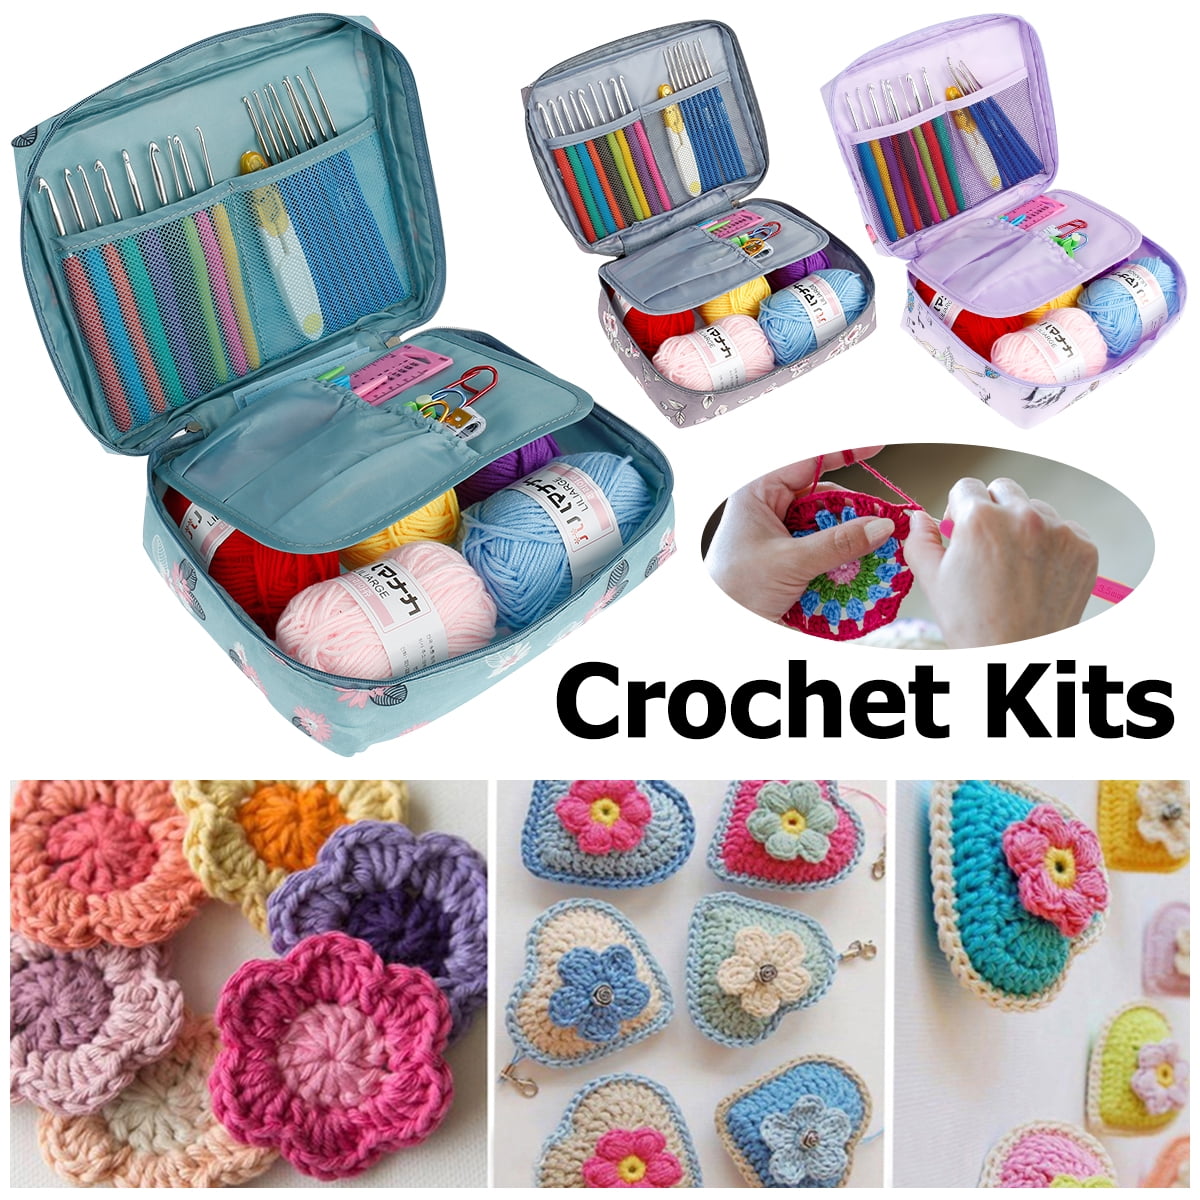 Retrok 82Pcs Crochet Kits for Beginners Colorful Crochet Hook Set